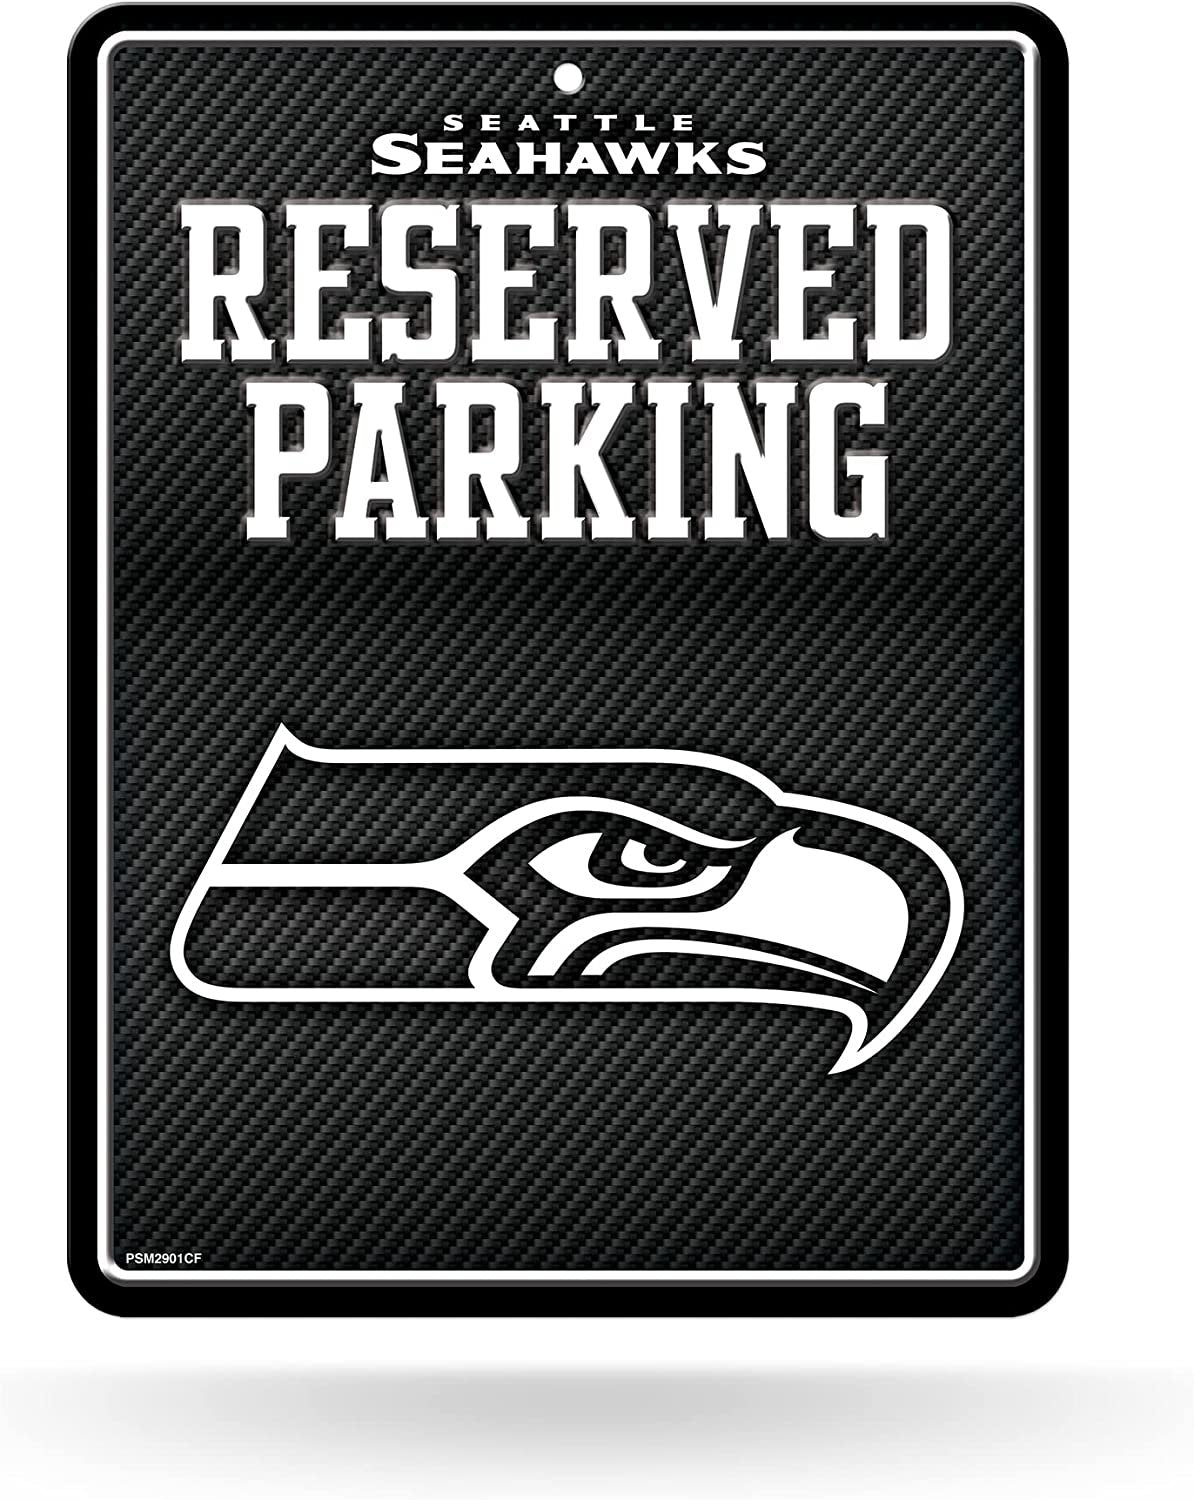 Seattle Seahawks Metal Parking Novelty Wall Sign 8.5 x 11 Inch Carbon Fiber Design